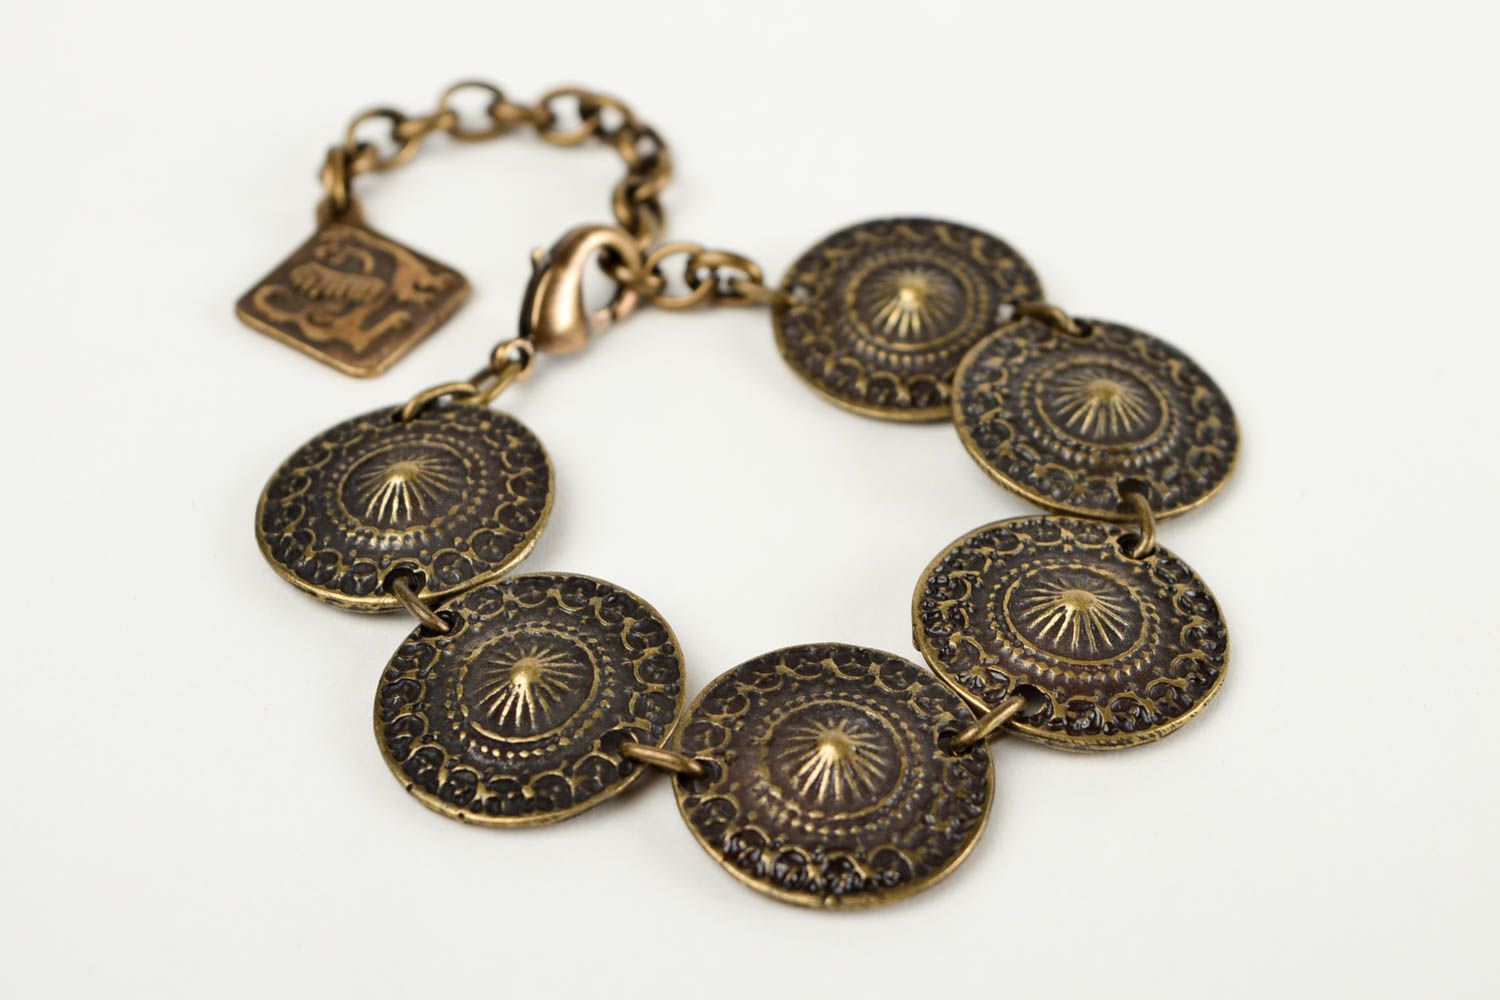 Elite handmade metal bracelet artisan jewelry designs accessories for girls photo 4